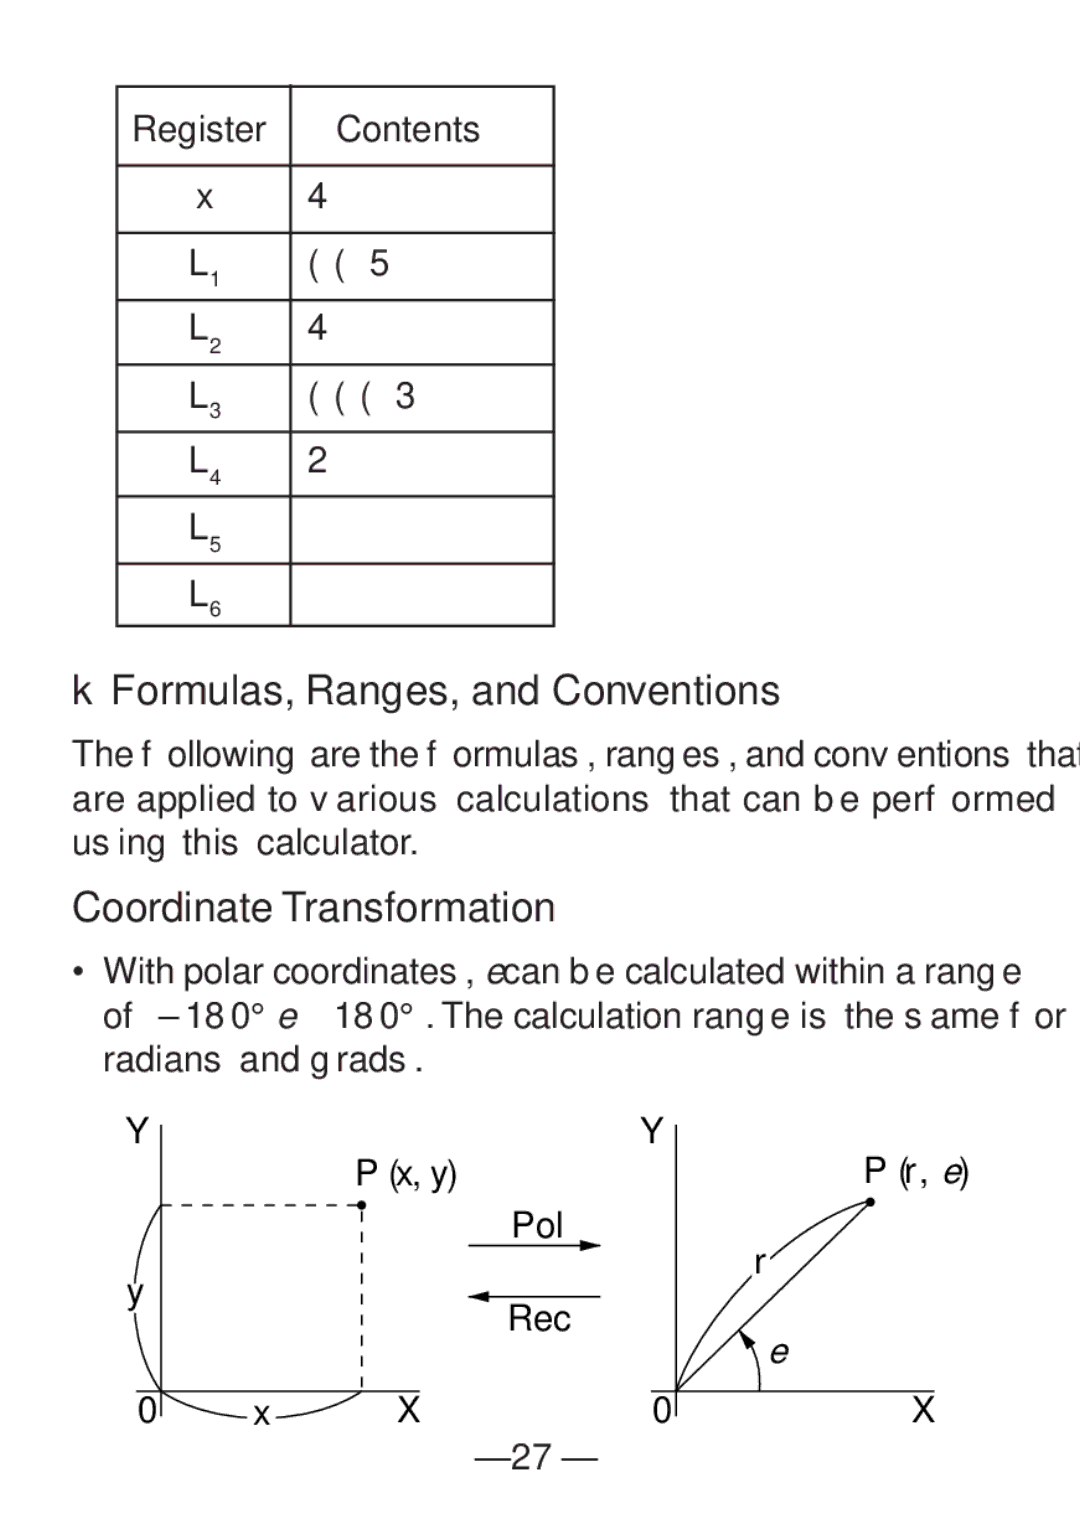 Casio FX-82SX manual KFormulas, Ranges, and Conventions, Coordinate Transformation 